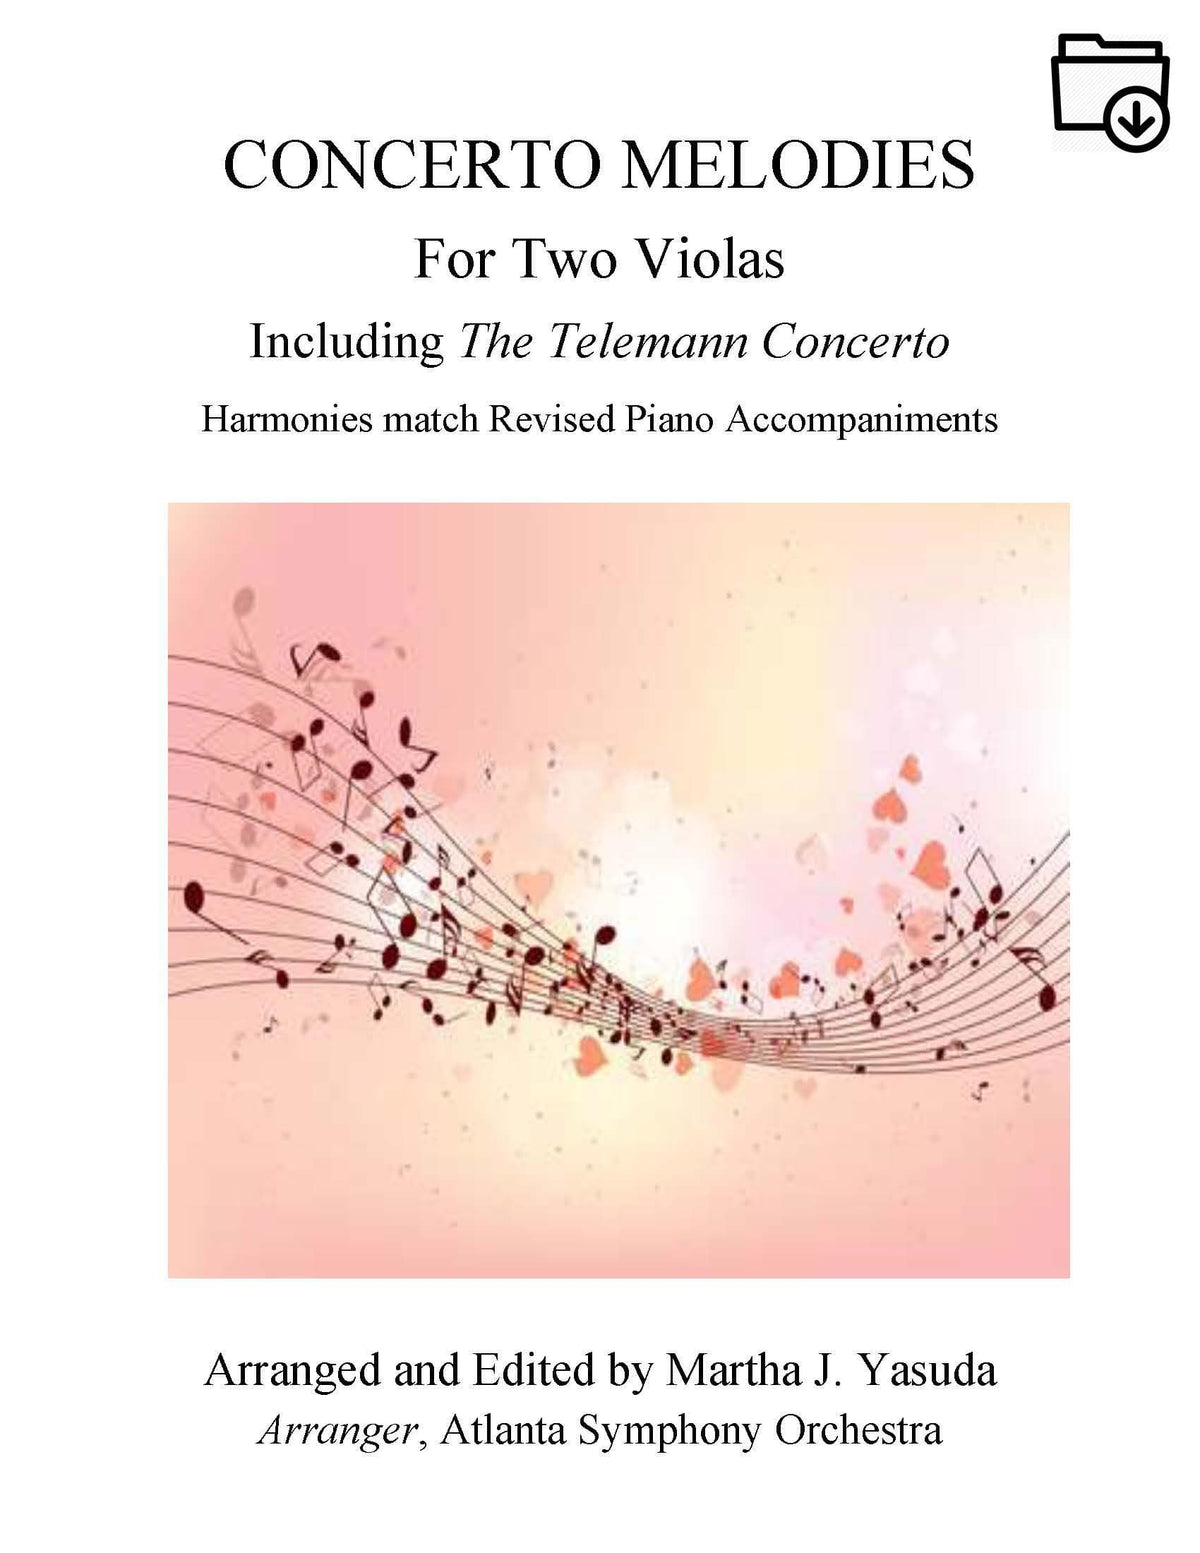 Yasuda, Martha - Concerto Melodies for Two Violas - Digital Download